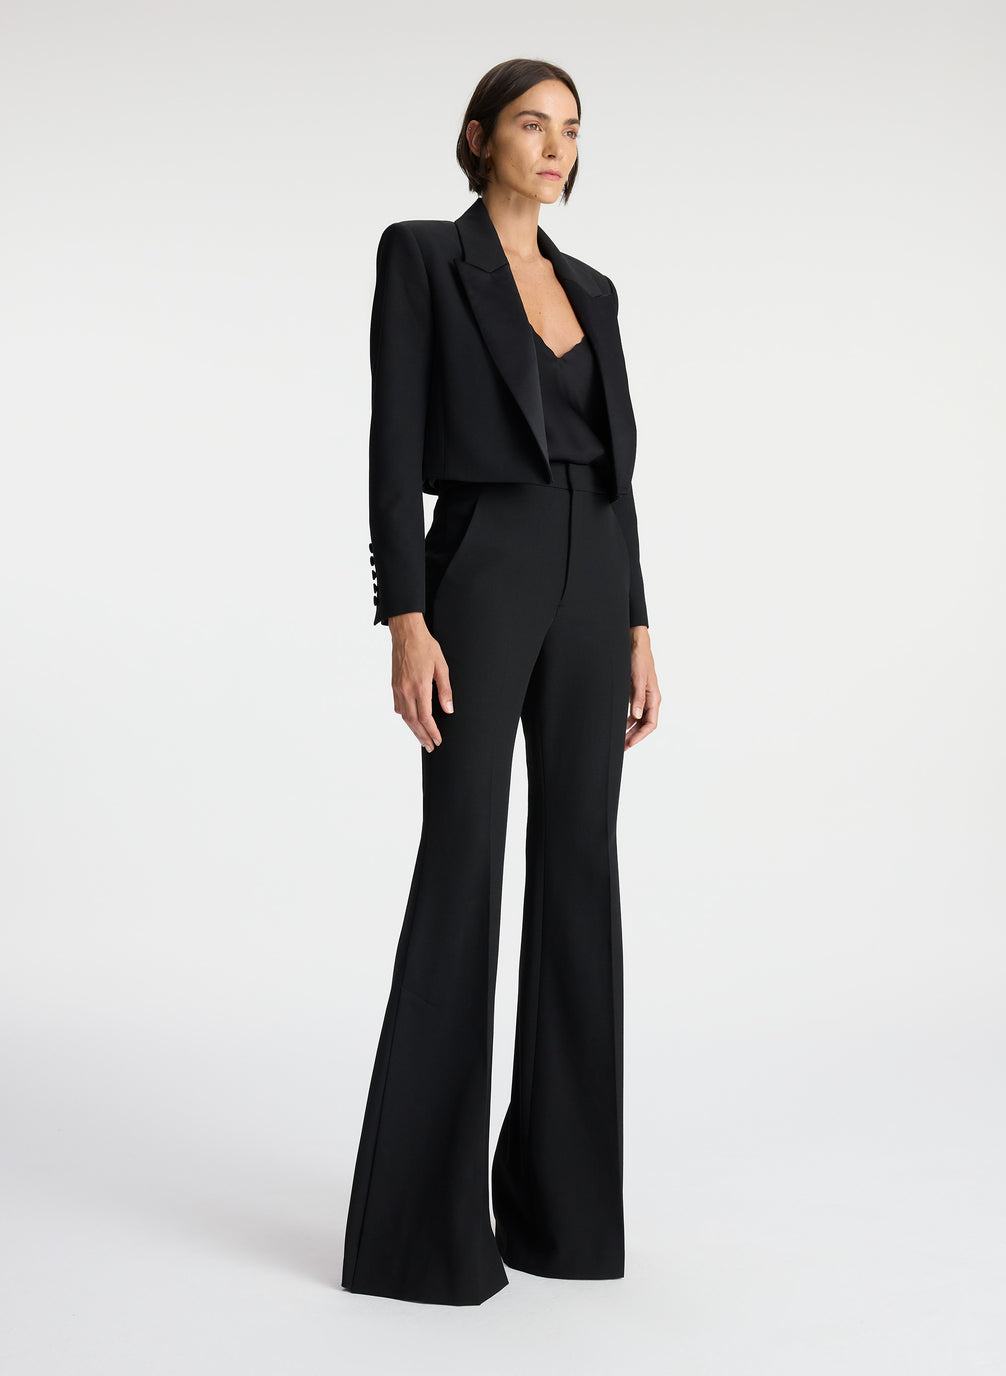 Black Womens Suit, Formal Pantsuit for Women, Black Formal Wear Womens,  Black Blazer and Pants, Double Breasted Blazer Set 